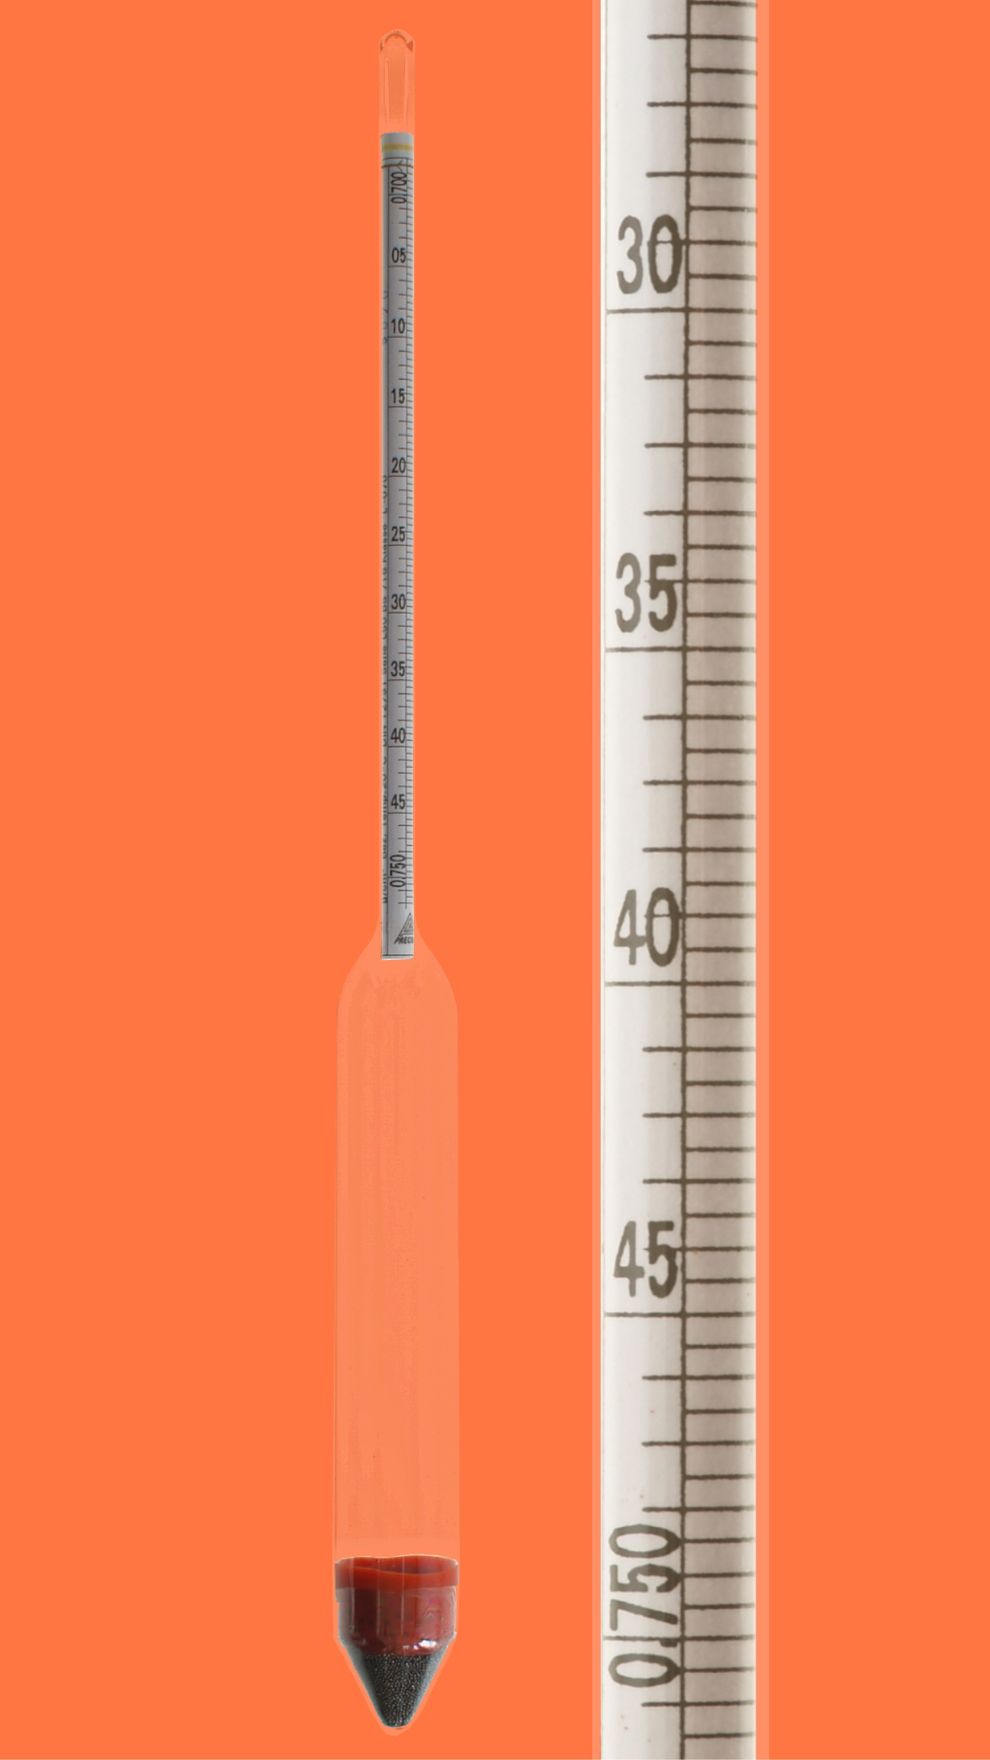 Aräometer, DIN 12791, L50, 1,05-1,10:0,0005g/cm³, Bezugstemp. 20°C, ohne Thermometer